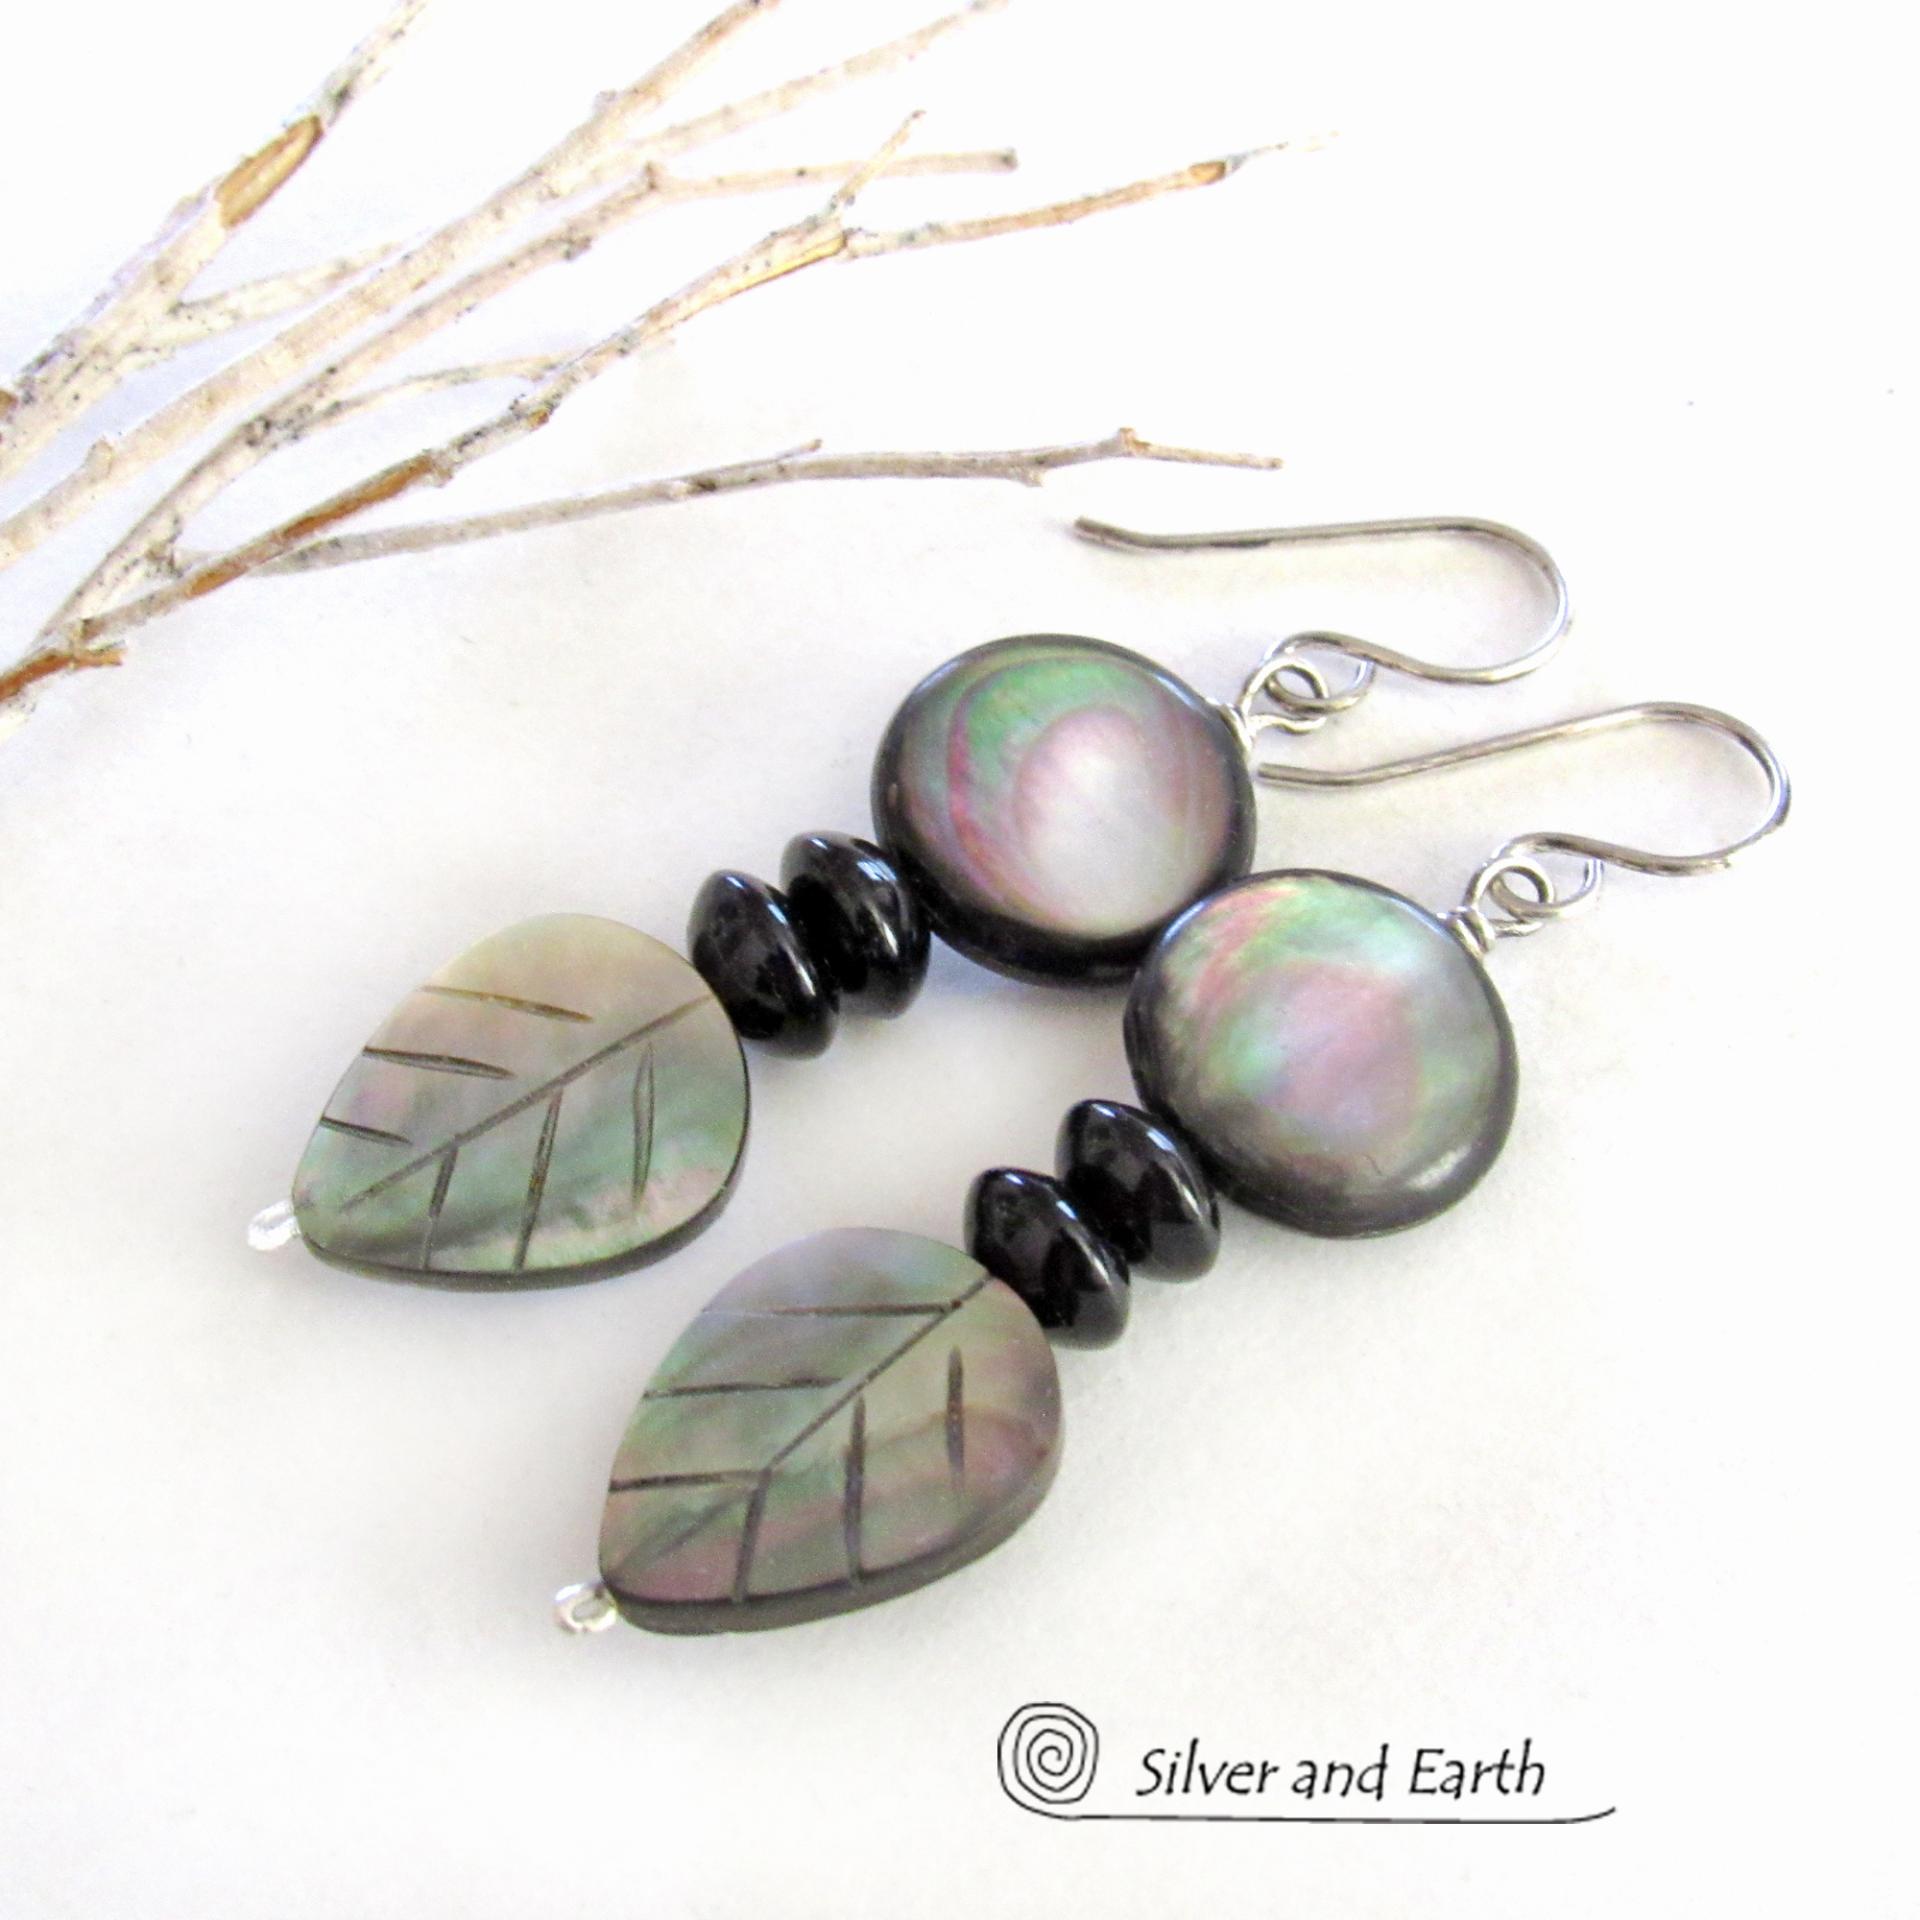 Black Lip Mother of Pearl Leaf Earrings with Black Onyx - Elegant Modern Nature Jewelry